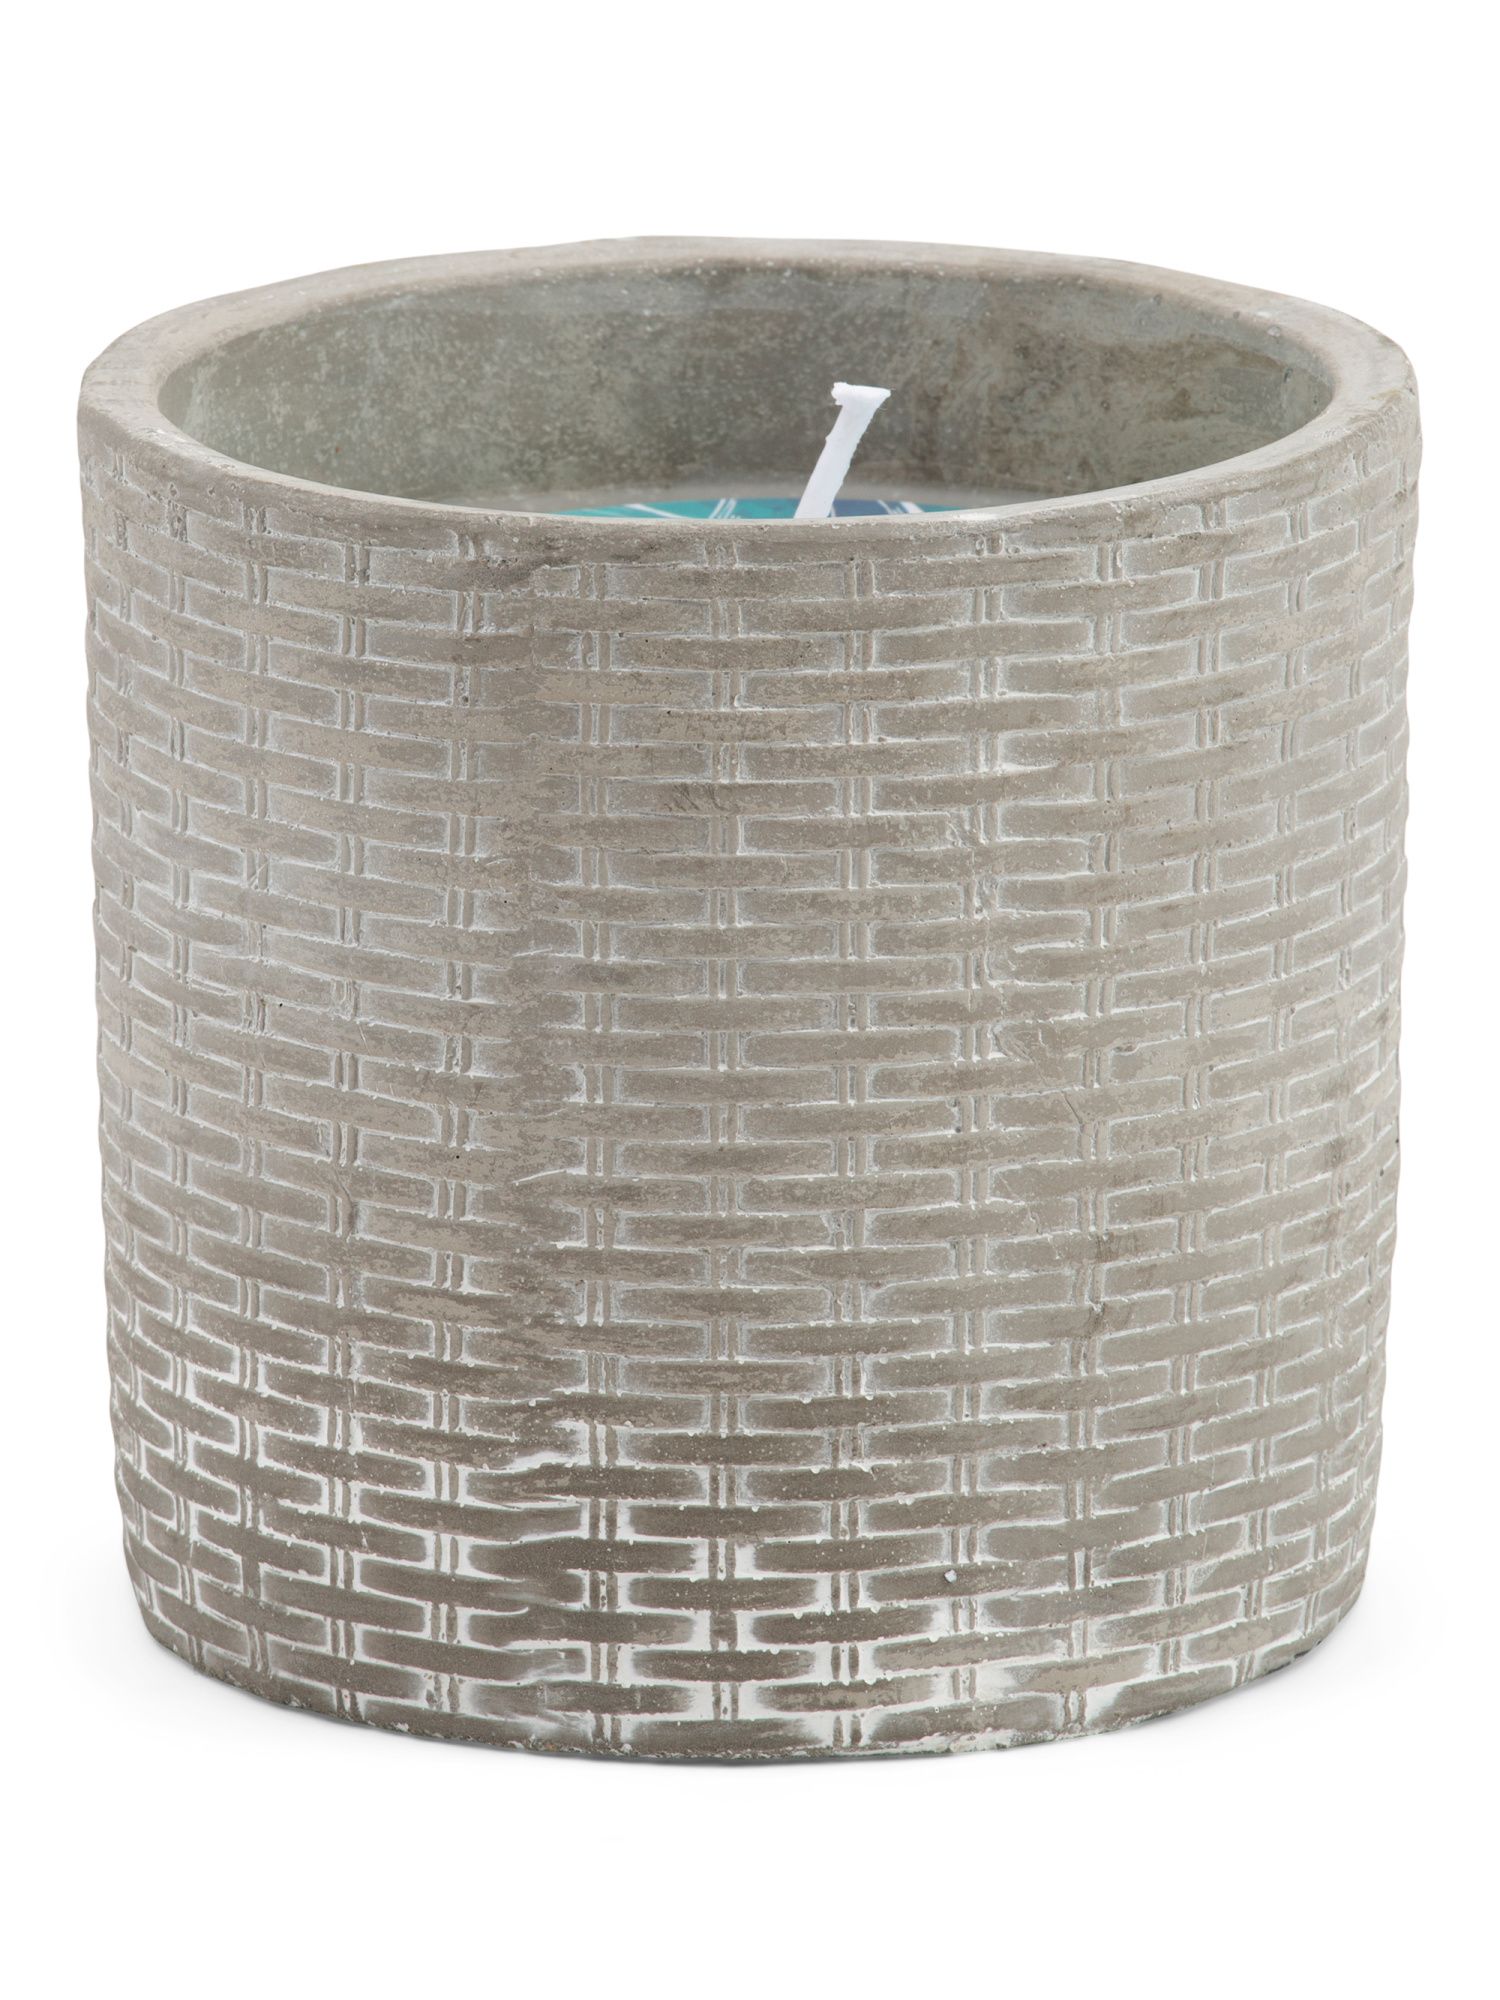 20oz Citronella Candle In Basket Weave Cement Pot | TJ Maxx